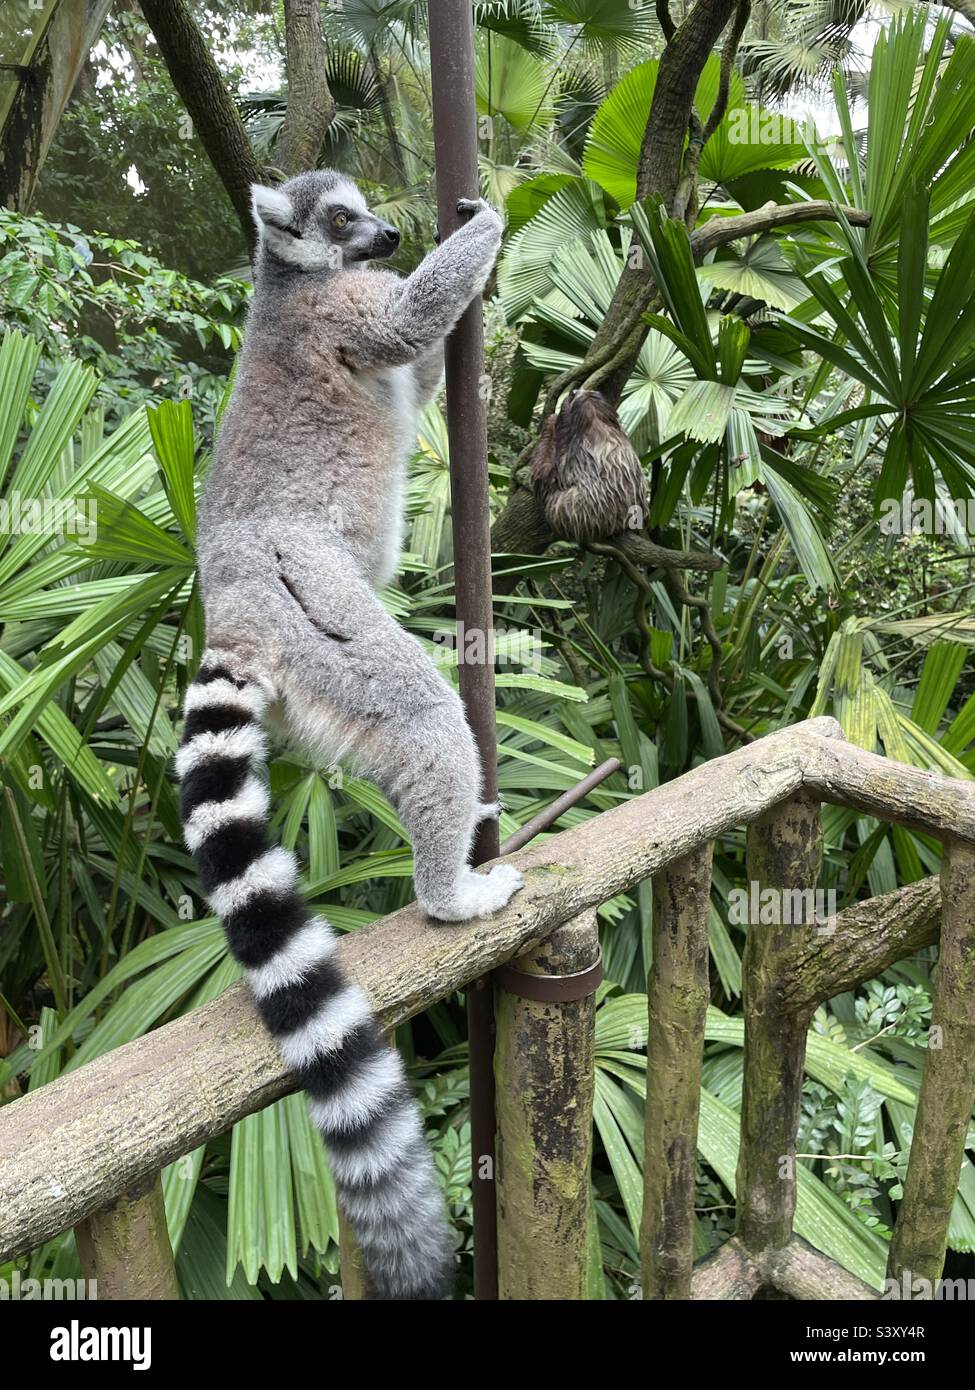 Lemur and a sloth at the Singapore Mandai zoo Stock Photo